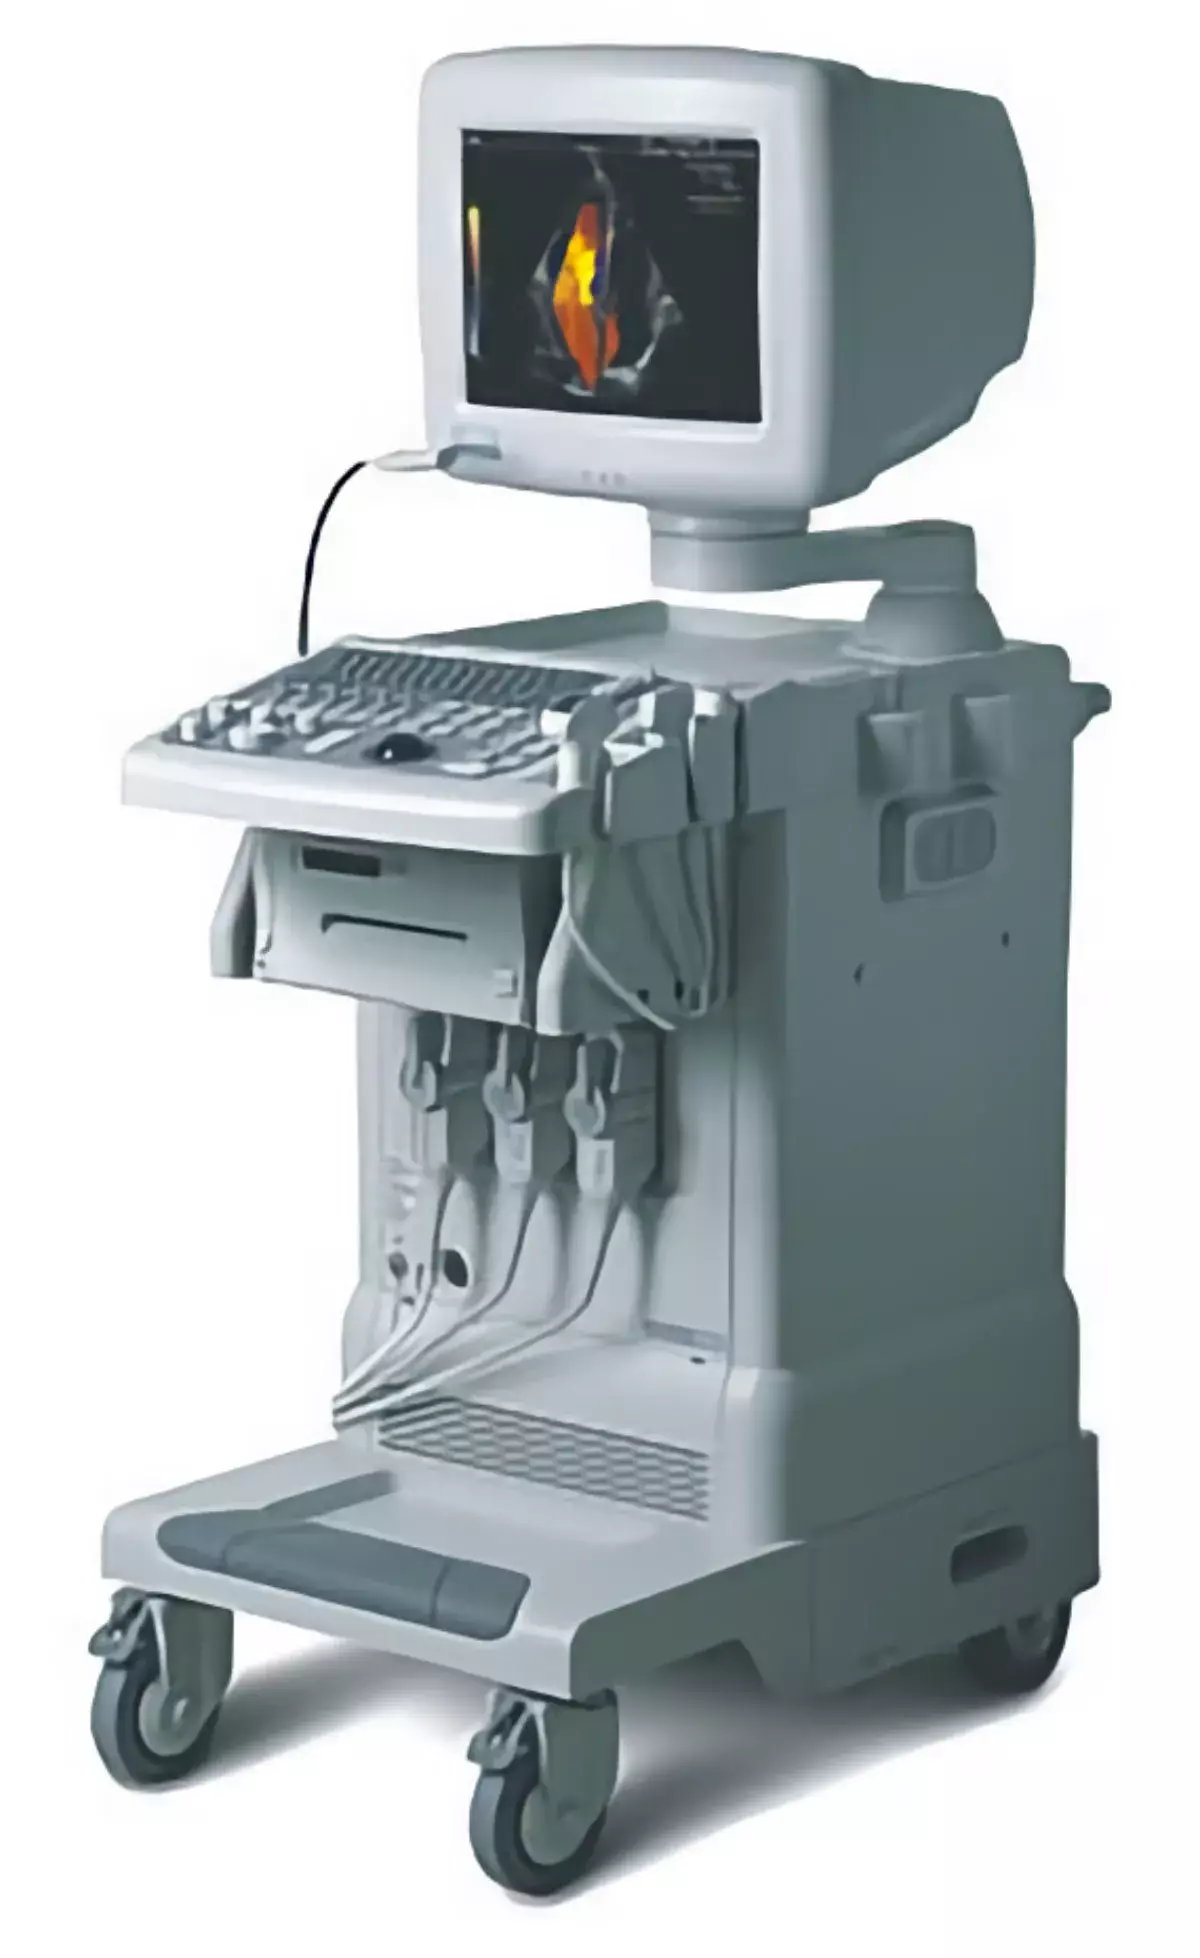 УЗИ сканер SonoAce-8000 Ex (снят с производства)